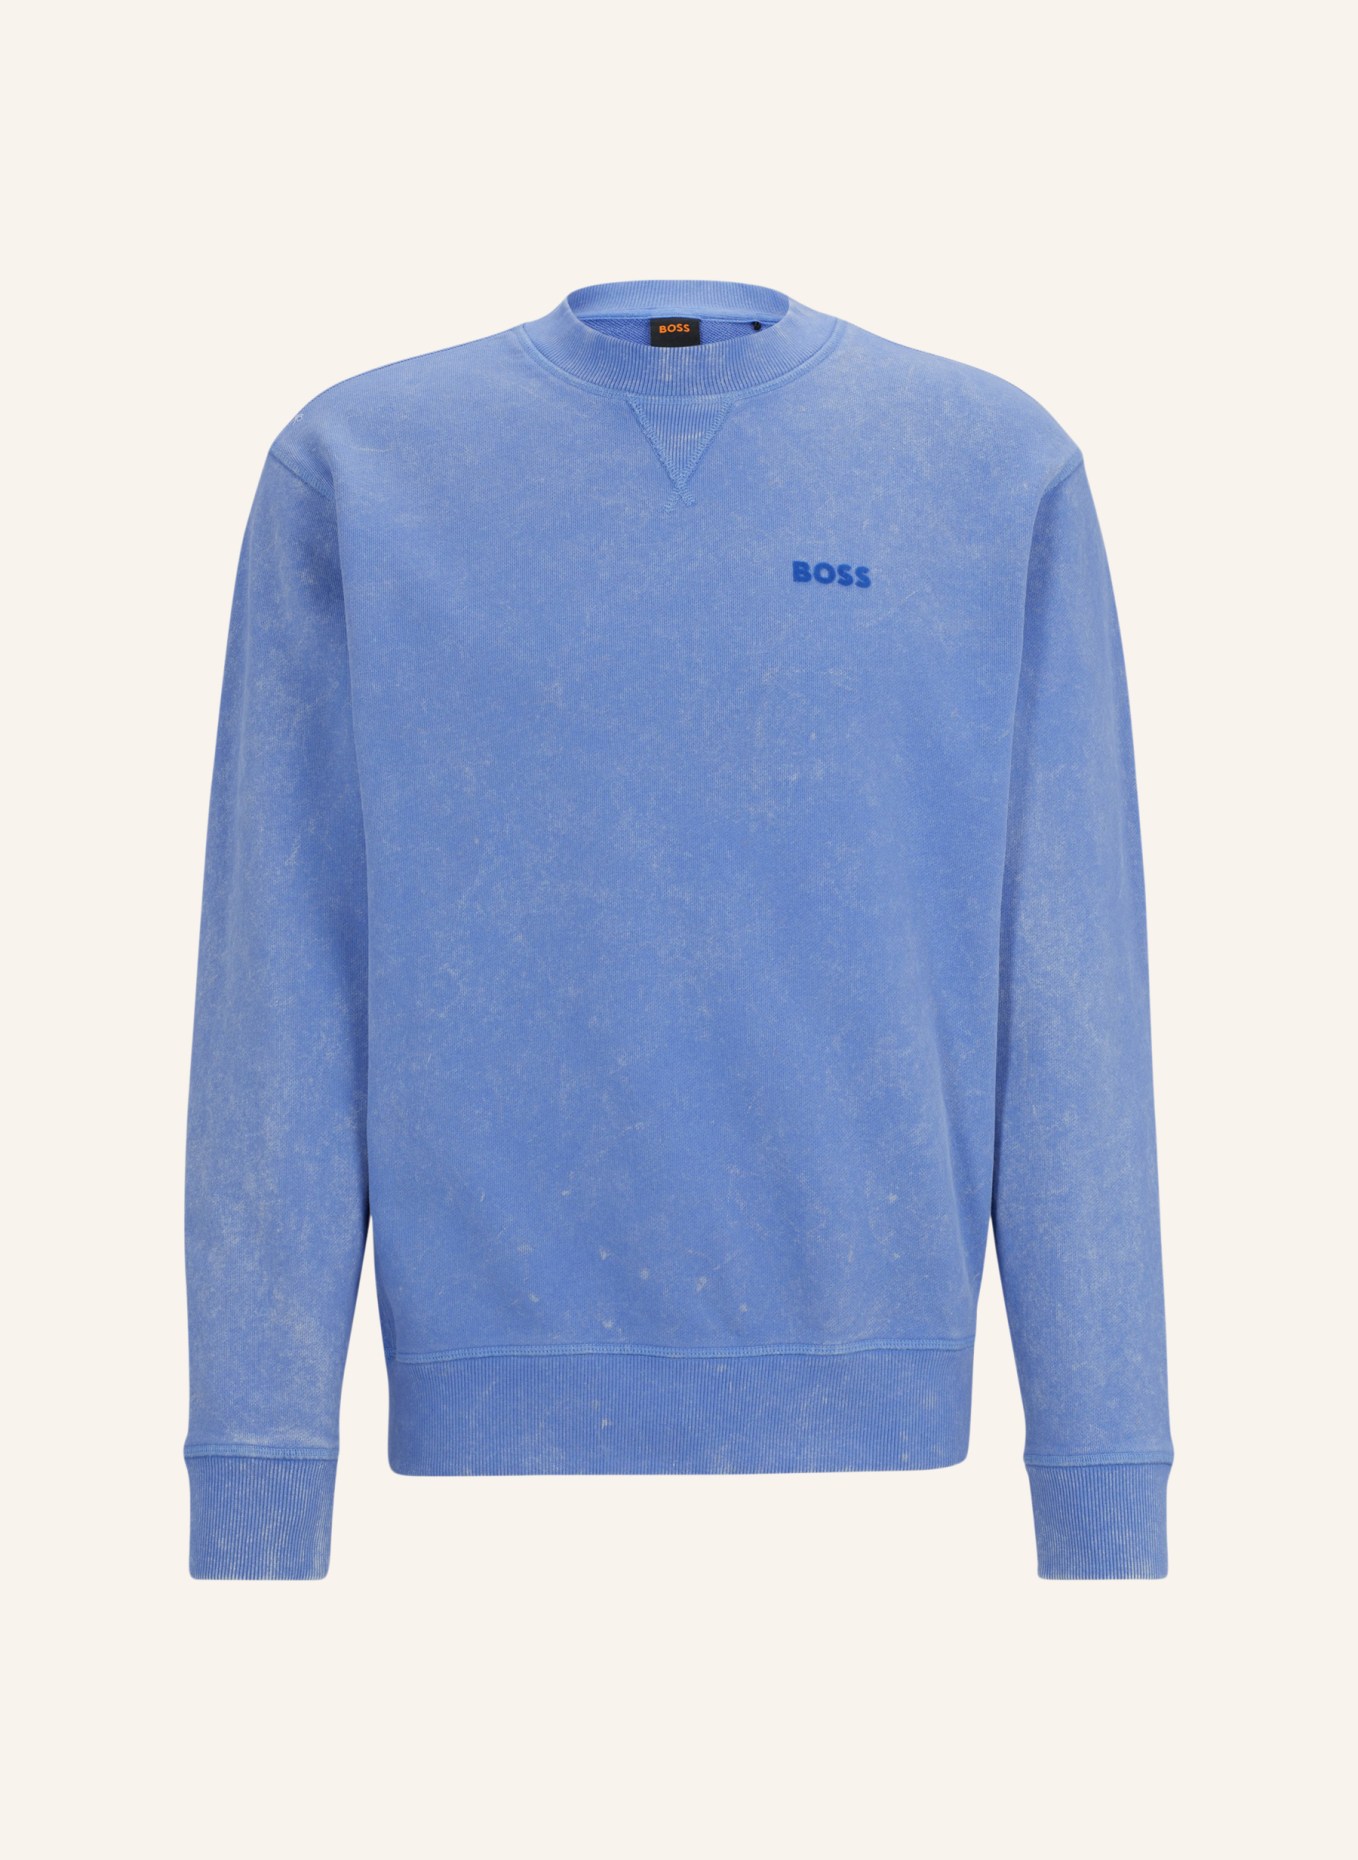 BOSS Sweatshirt WE_BOSSLOGORAW Relaxed Fit, Farbe: LILA (Bild 1)